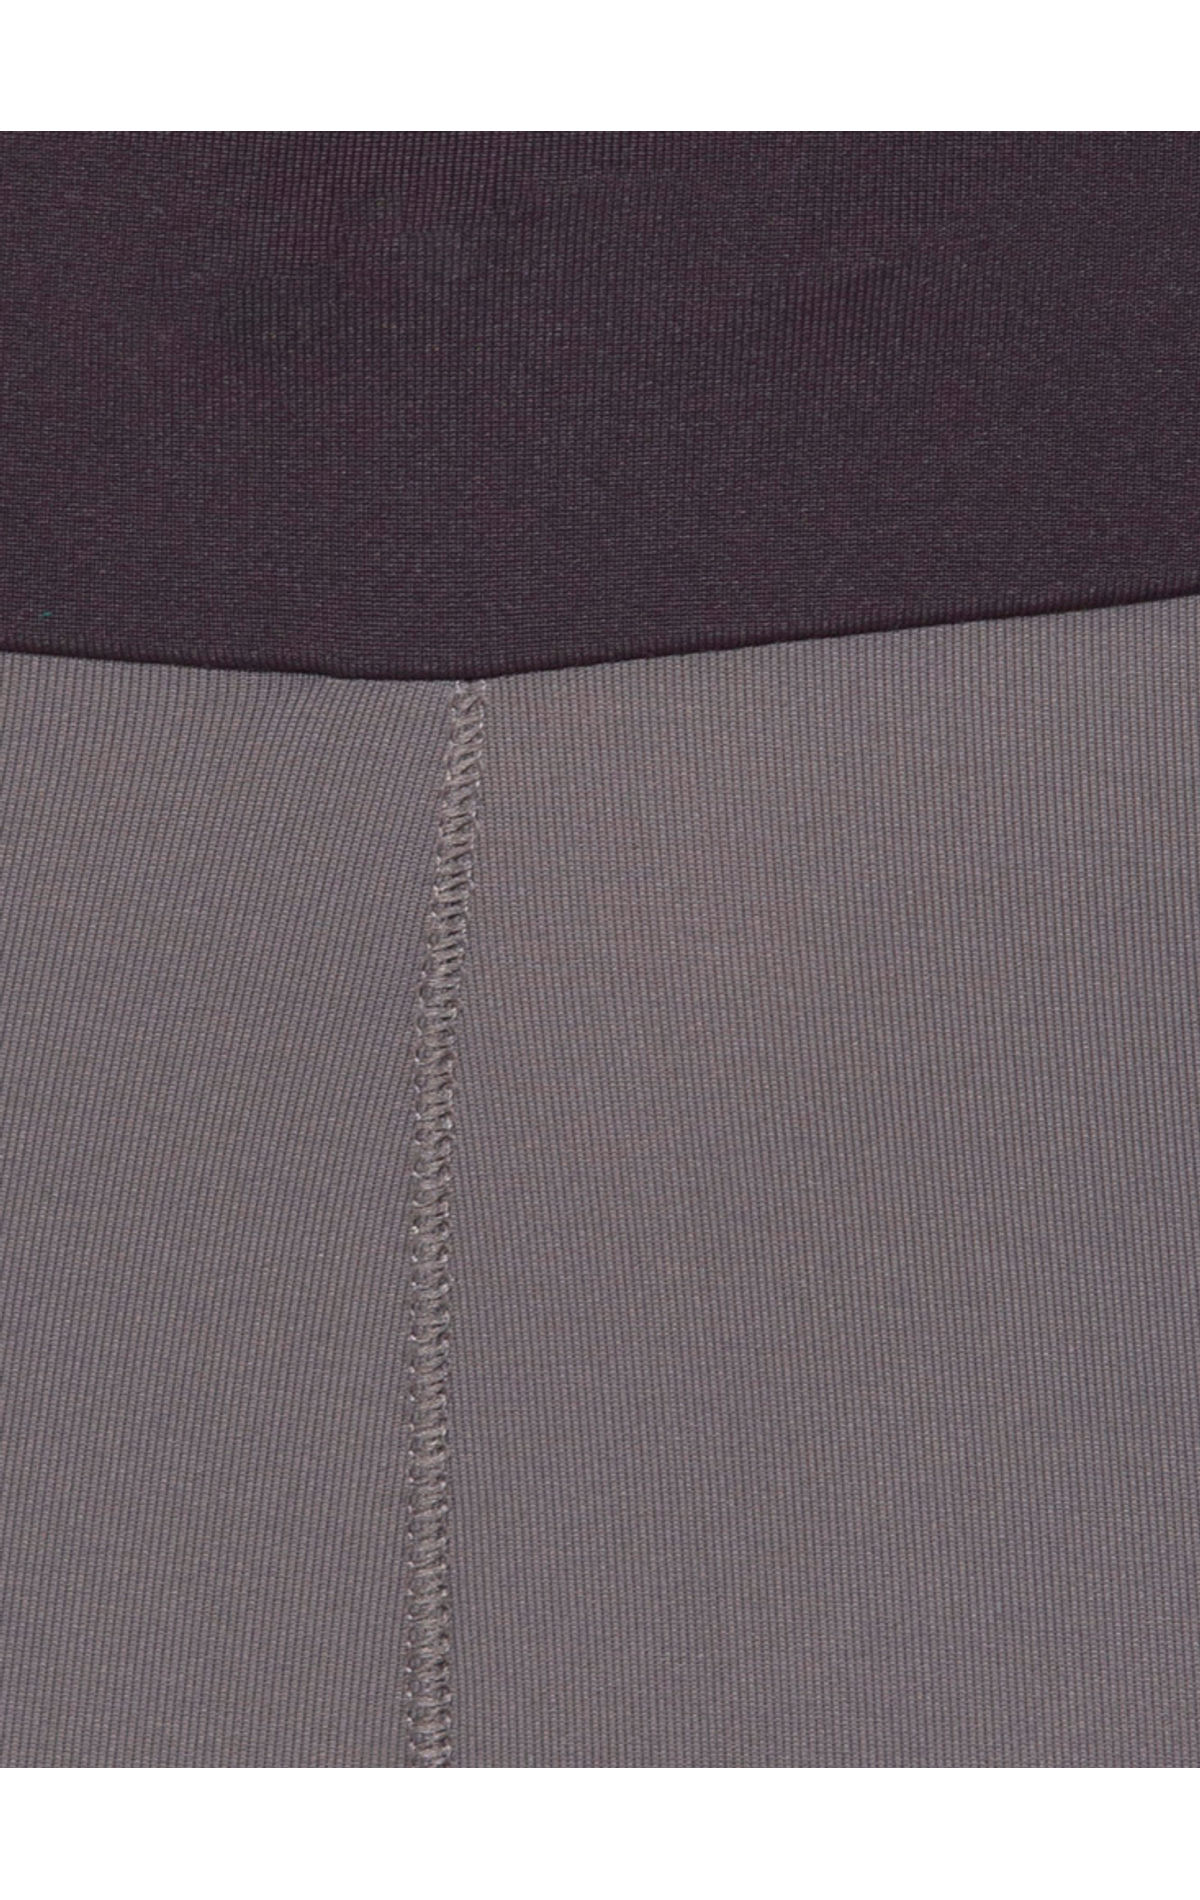 Bodyactive Dark Grey Melange Yoga Pants with Pockets for Women